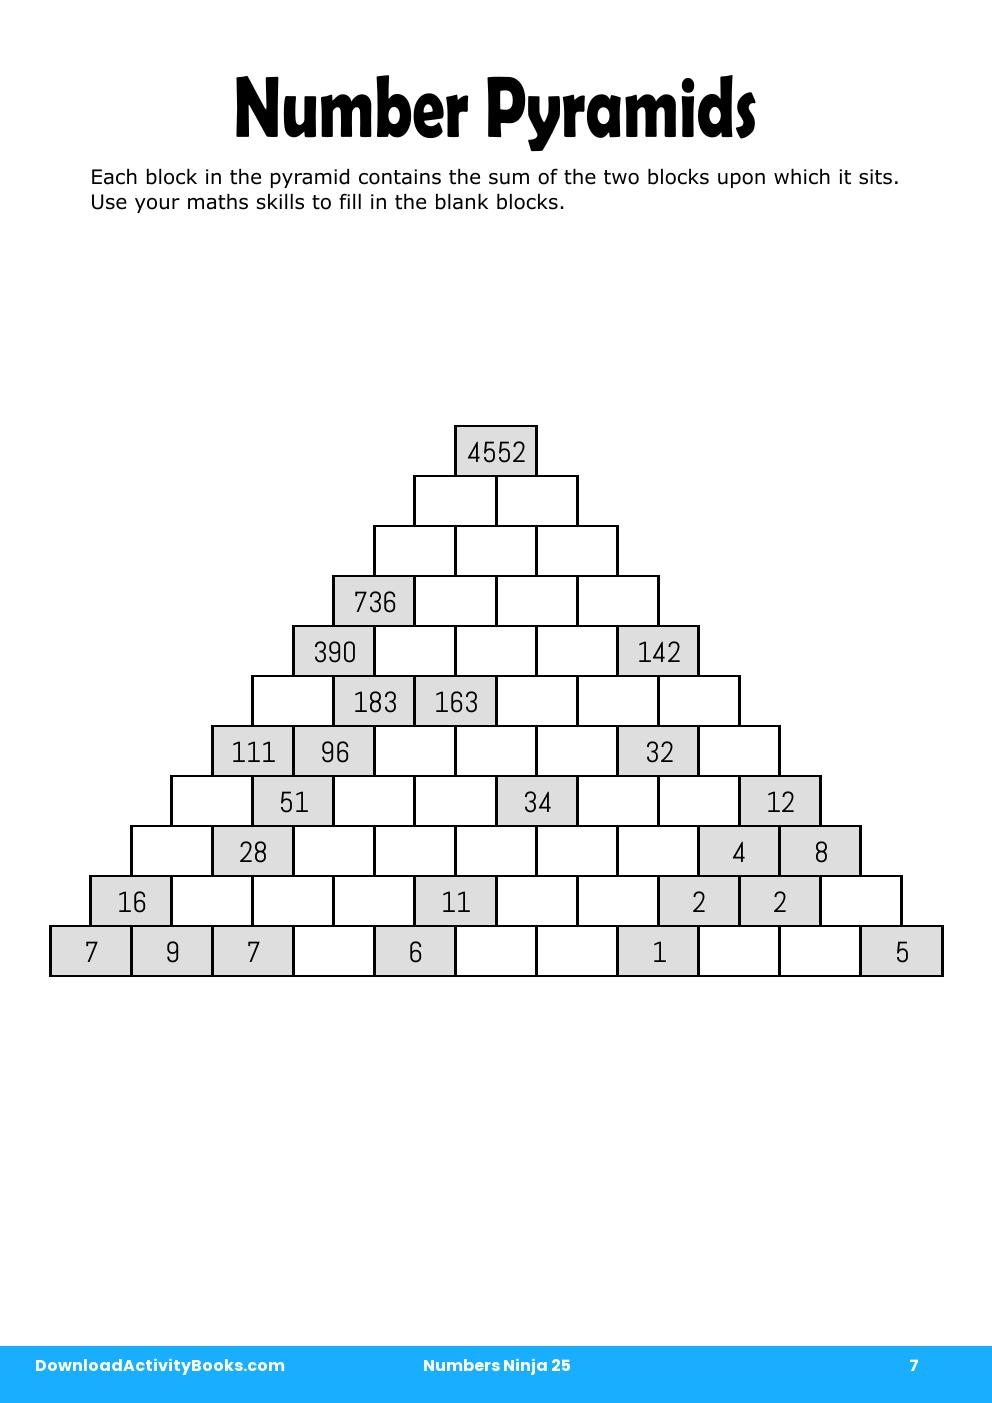 Number Pyramids in Numbers Ninja 25